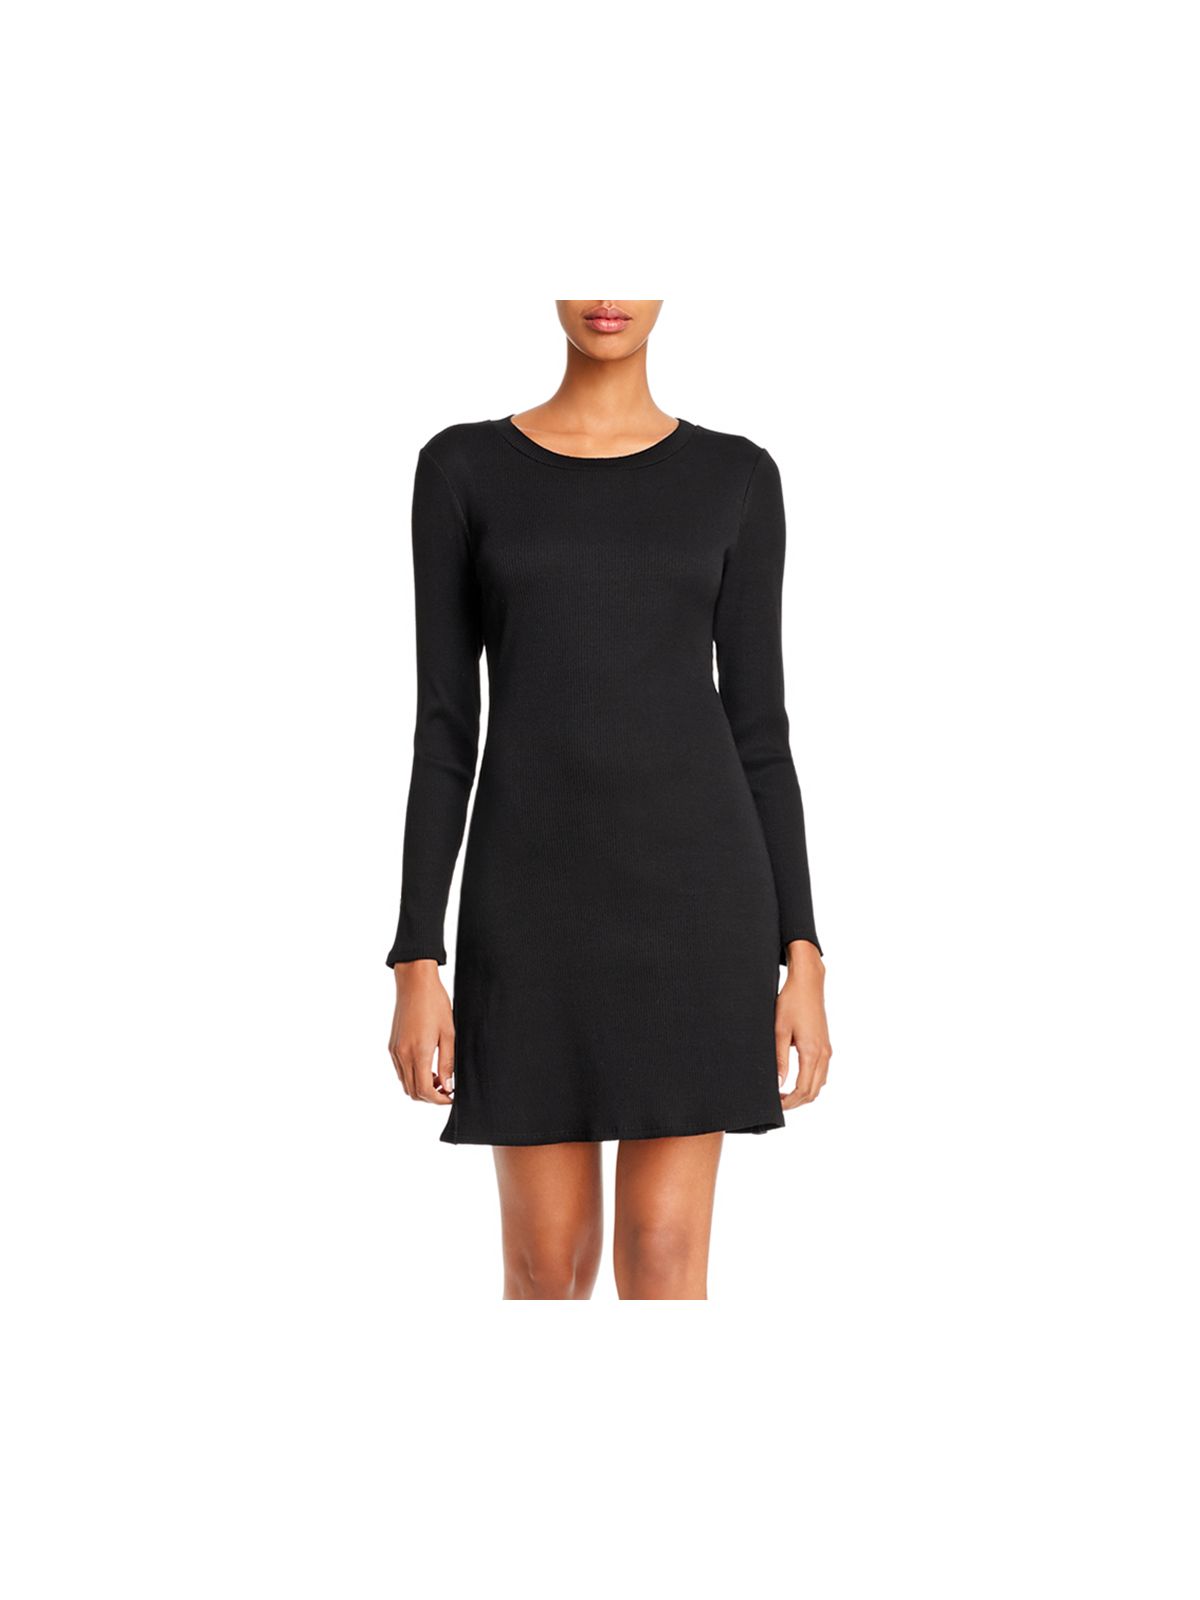 AQUA Womens Black Long Sleeve Jewel Neck Short Fit + Flare Dress XS